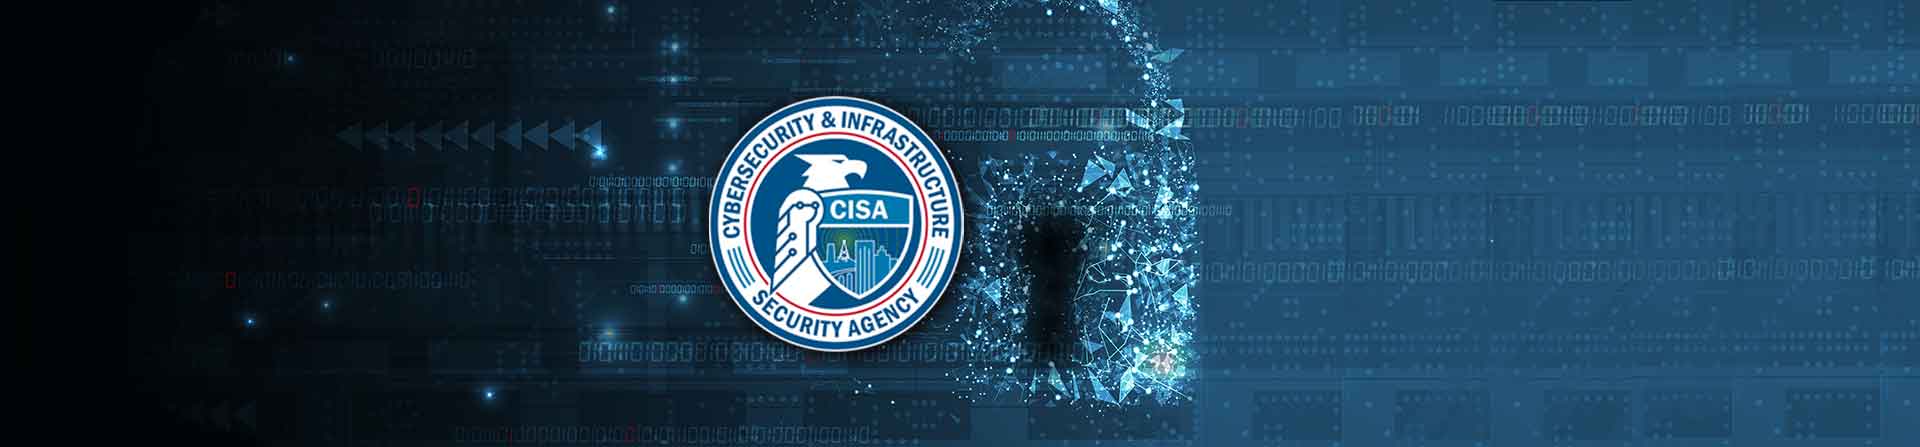 CISA cloud security